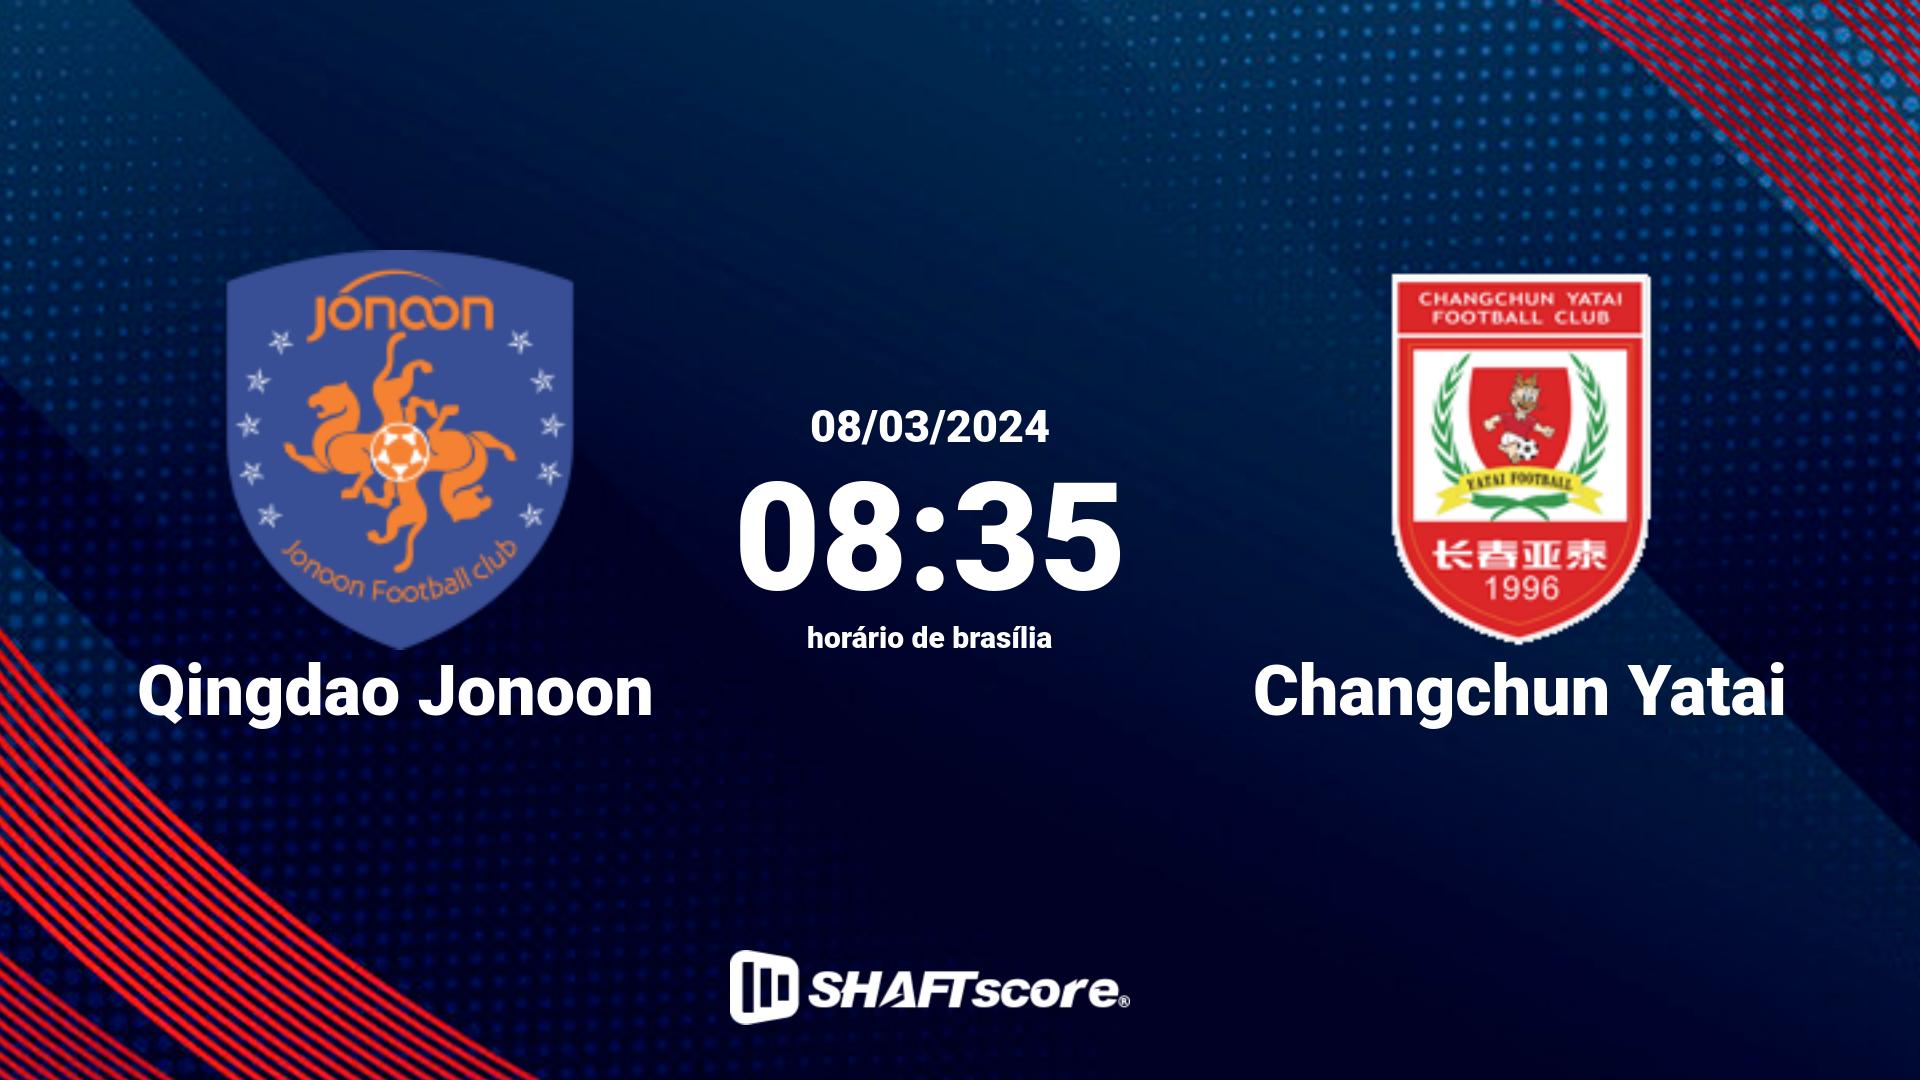 Estatísticas do jogo Qingdao Jonoon vs Changchun Yatai 08.03 08:35